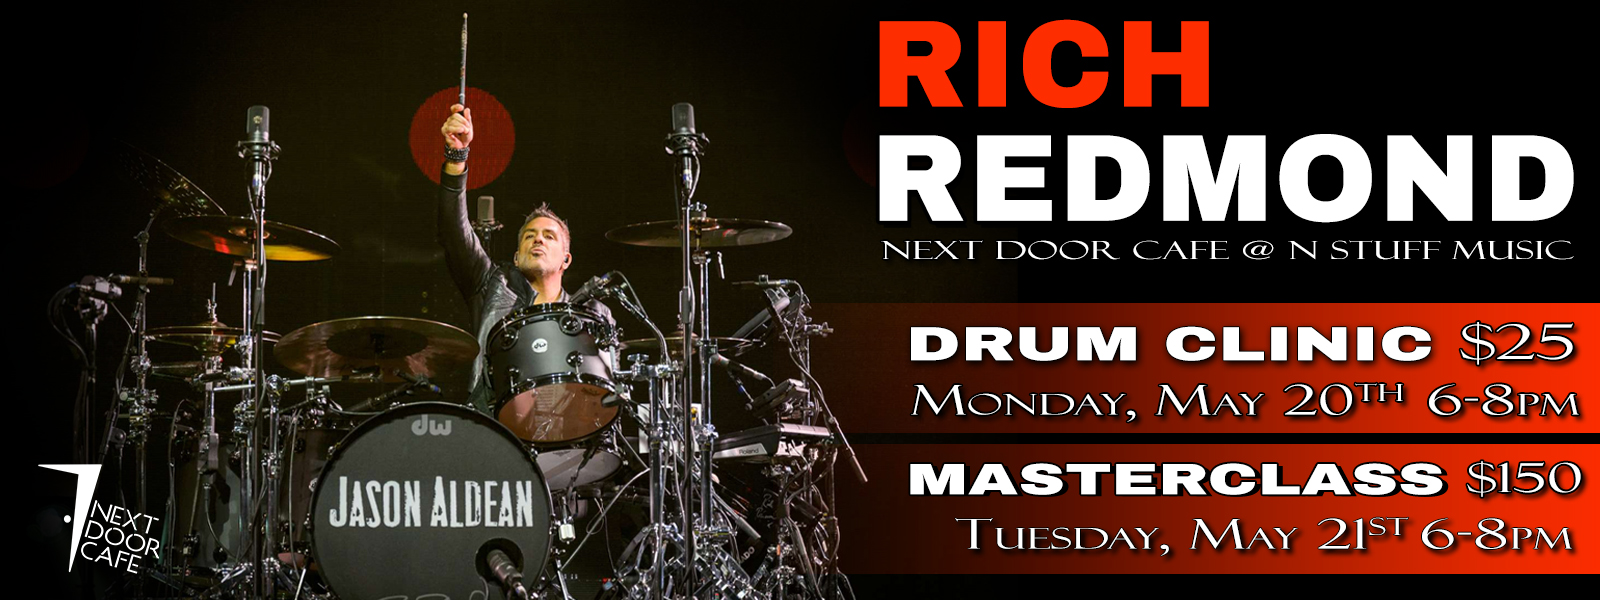 Rich Remond Drum Clinic & Master Class!